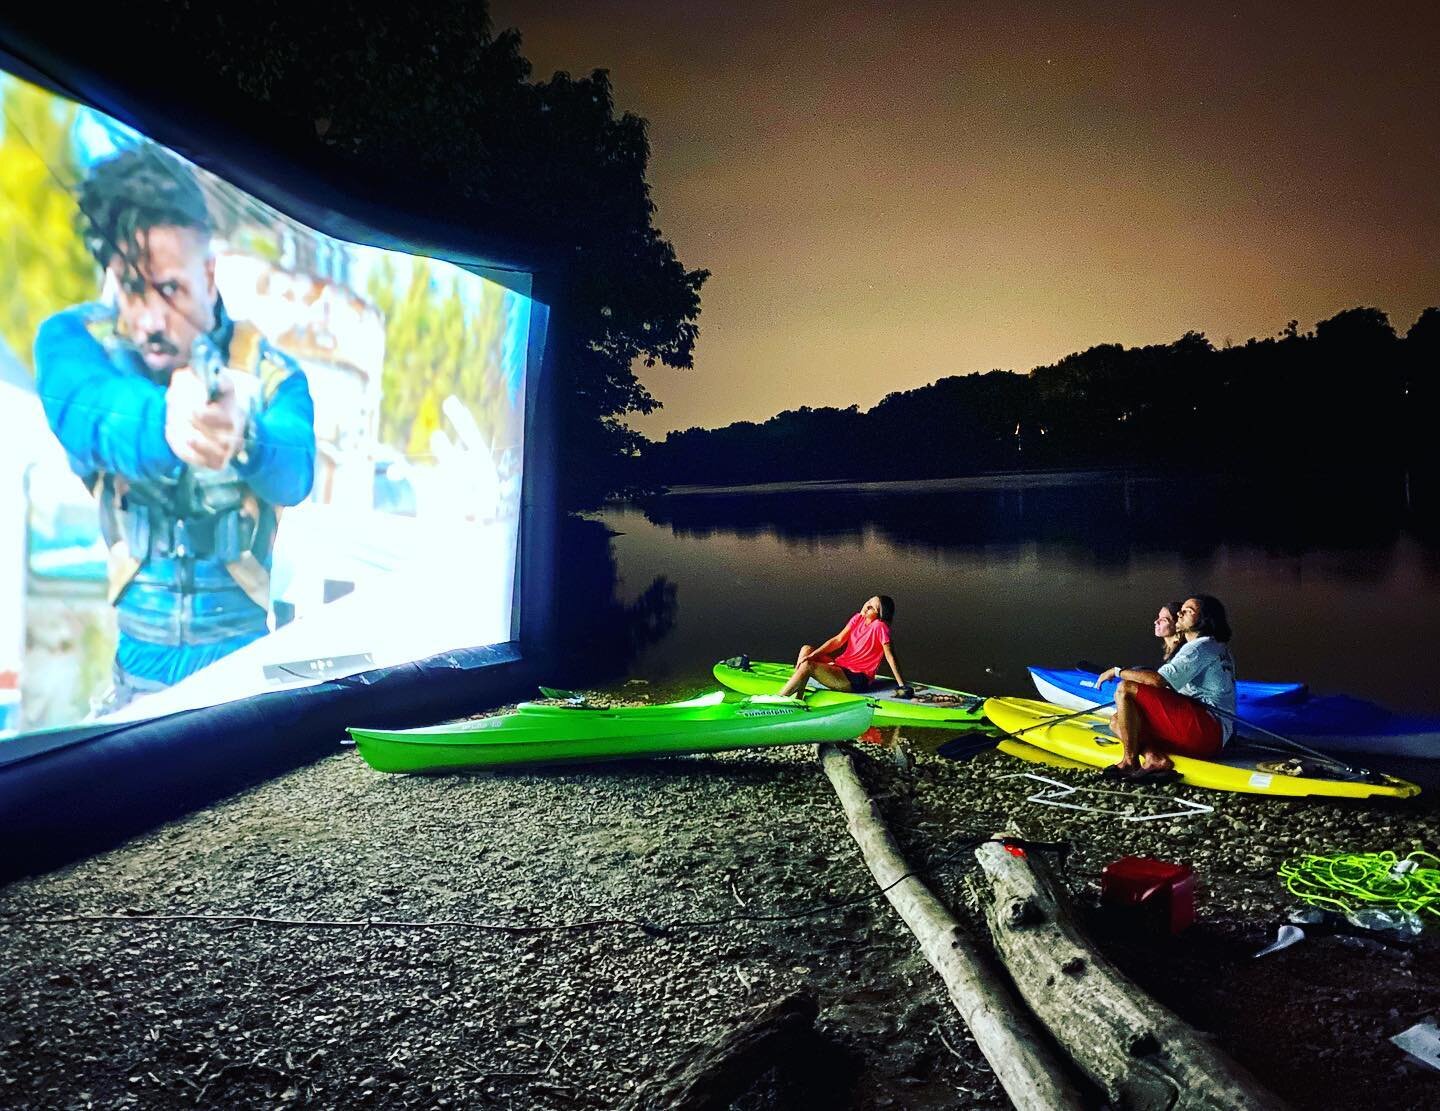 Water Cinema. Coming soon @thehiddendrivein #kayaking #supohio #paddleboarding #movienight